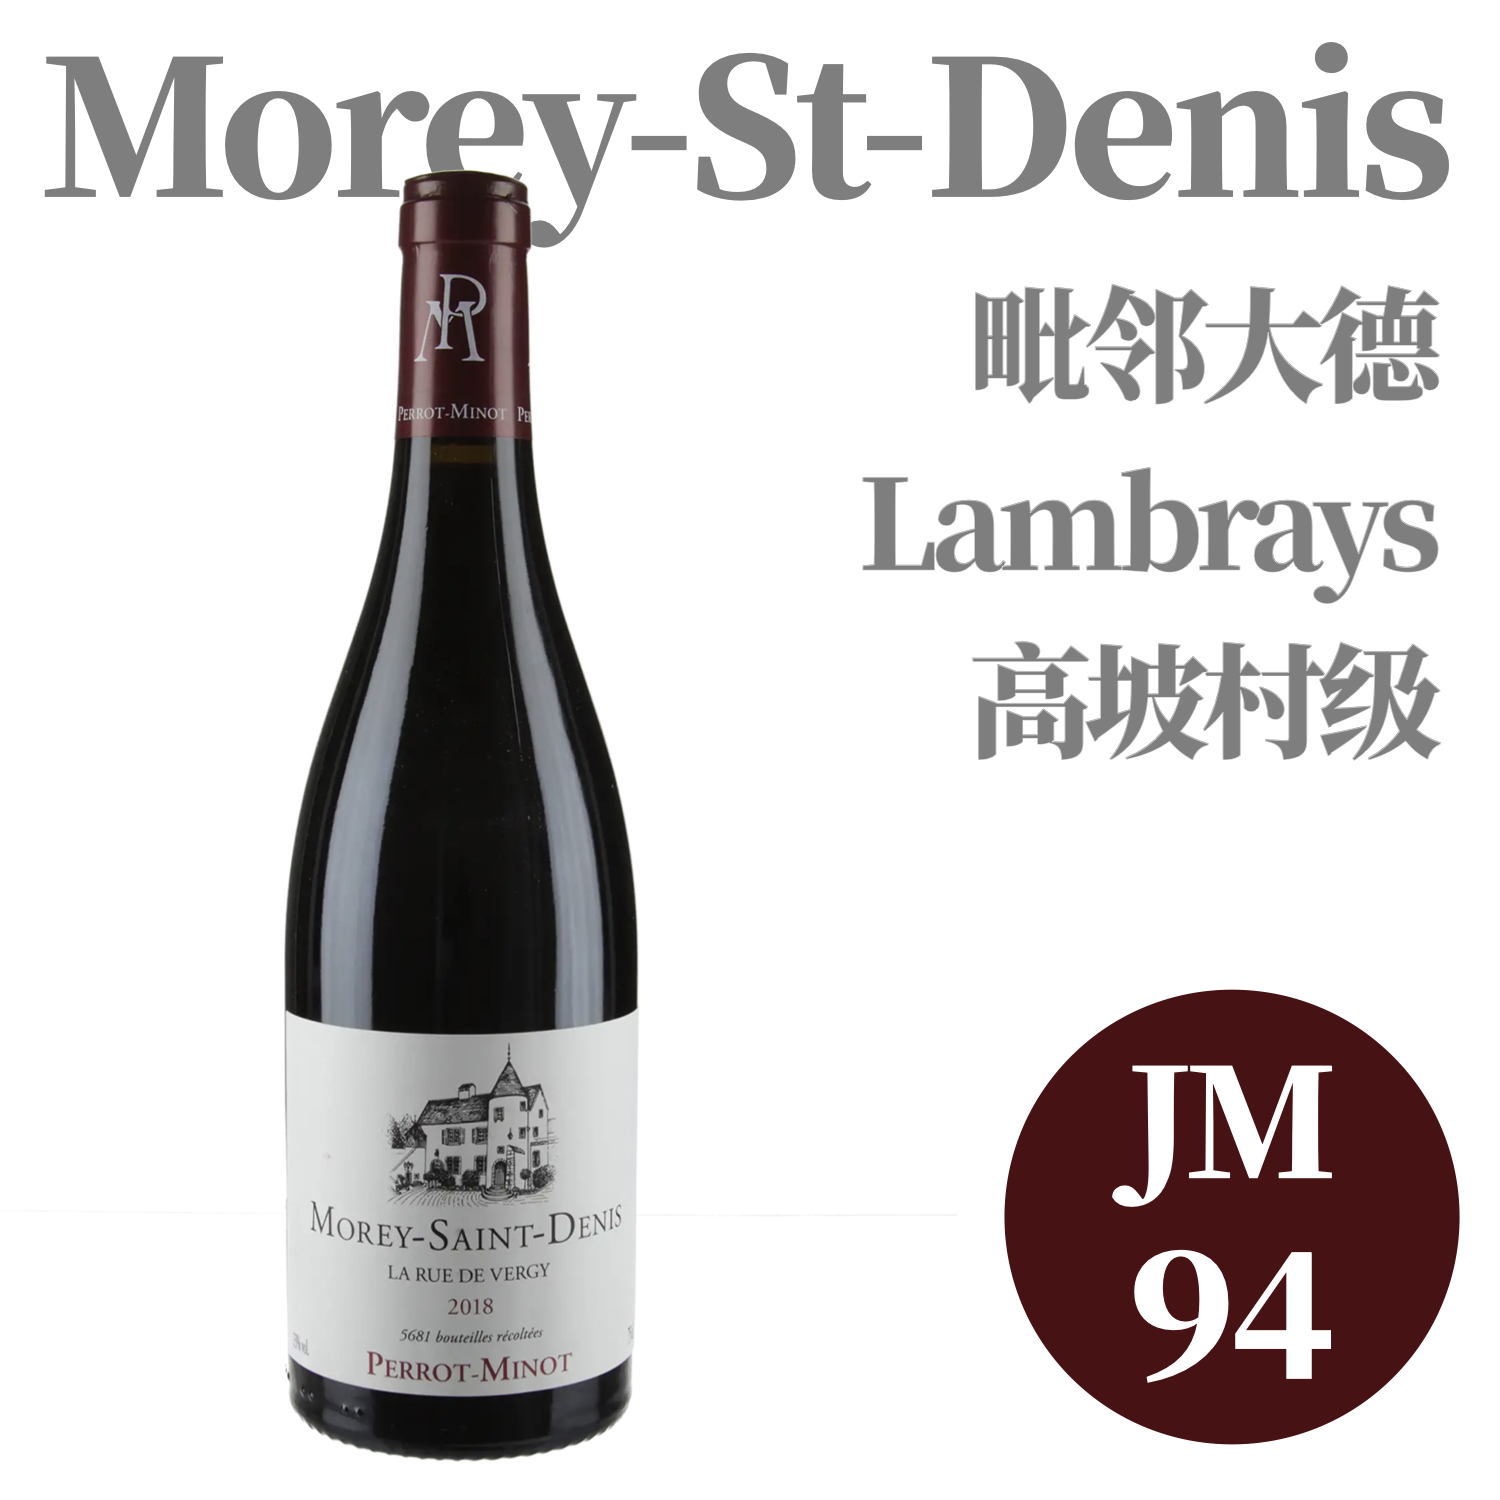 【JM94·毗邻大德Lambrays高坡地块】  2018 佩罗米诺酒庄莫雷圣丹尼村维基园干红  Domaine Perrot-Minot Morey-St-Denis La Rue de Vergy